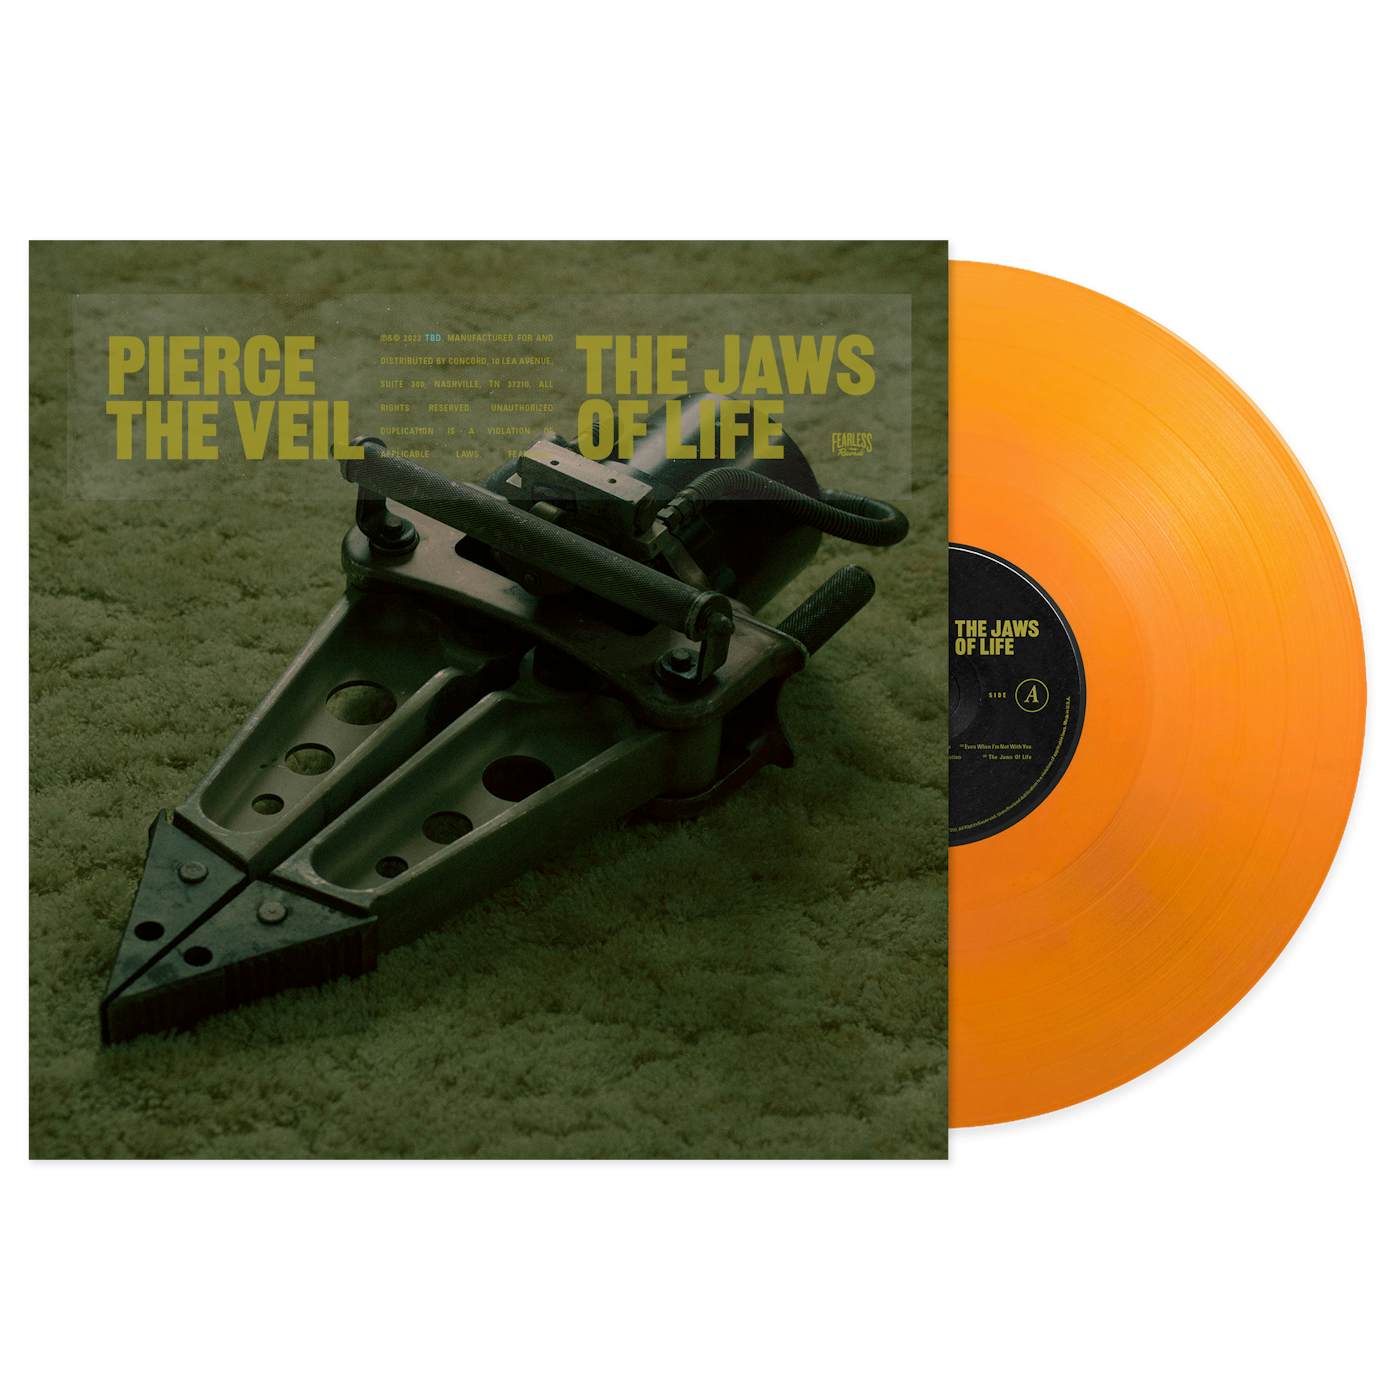 Pierce The Veil "The Jaws Of Life" Tangerine Vinyl